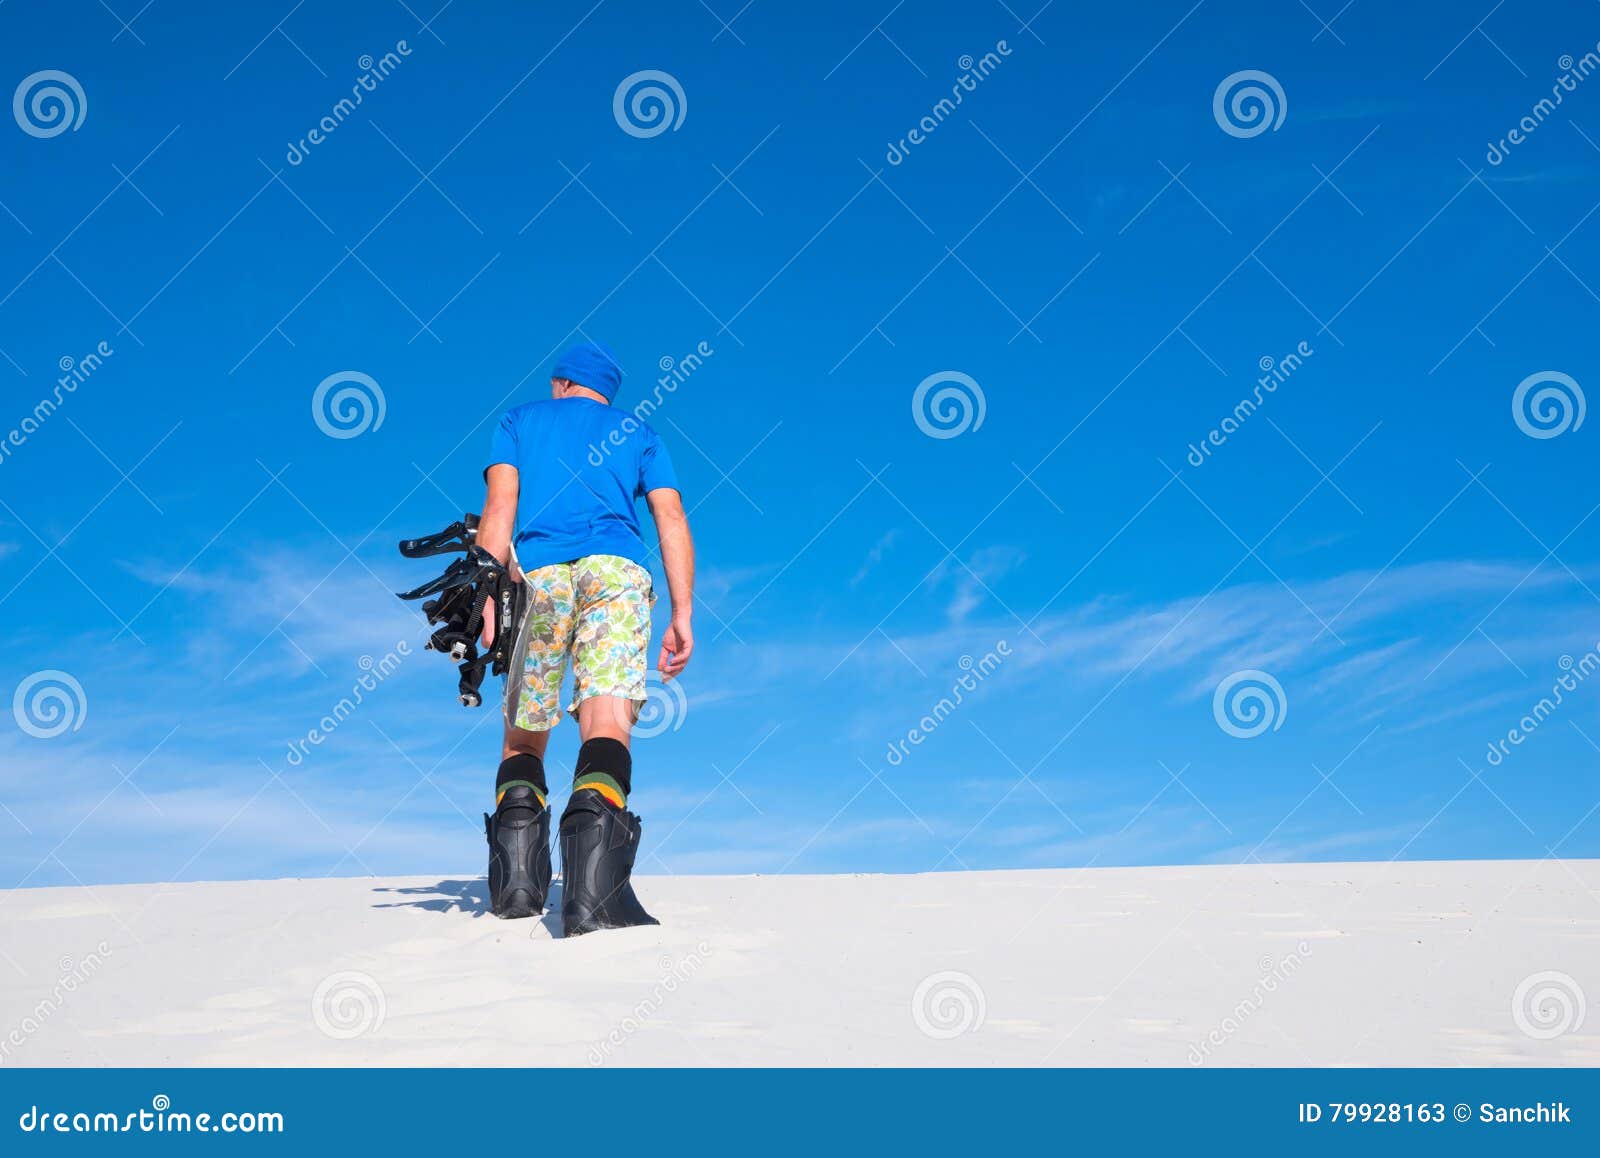 Sand boarding in desert stock image. Image of freedom - 79928163